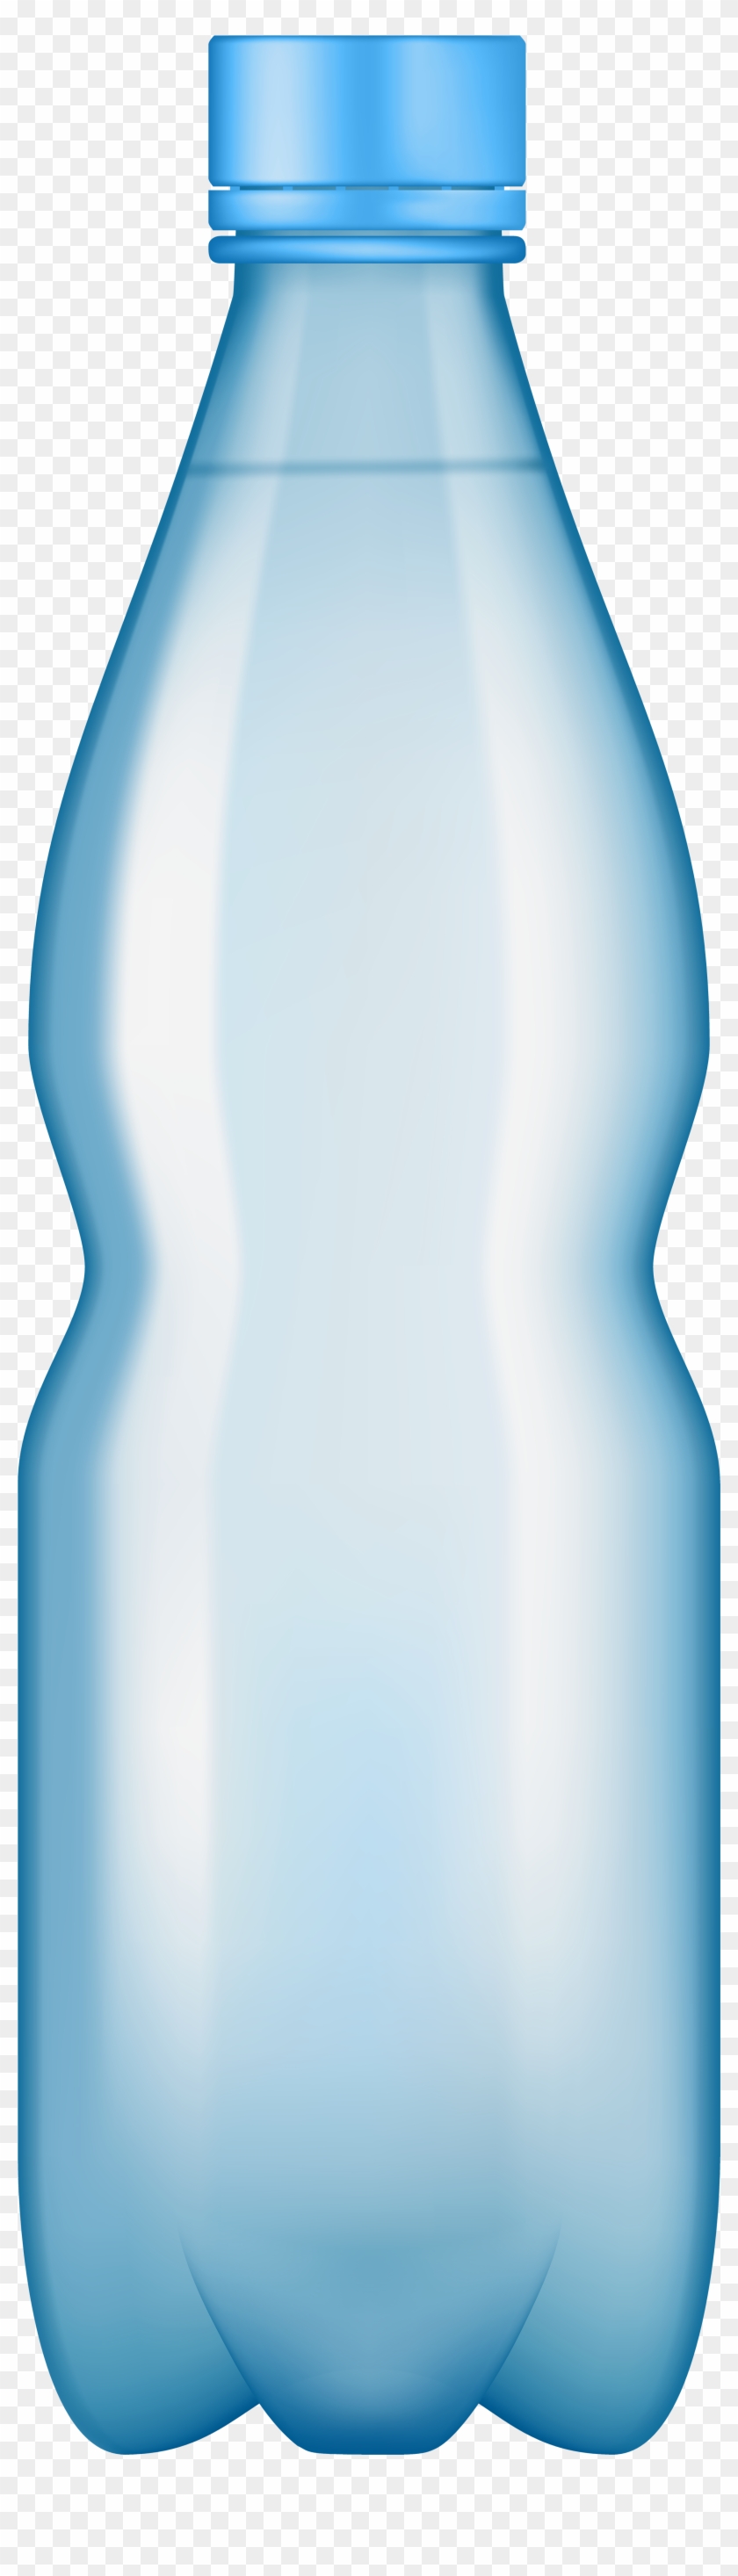 Free Png Download Water Bottle Png Images Background - Illustration Clipart #3552473